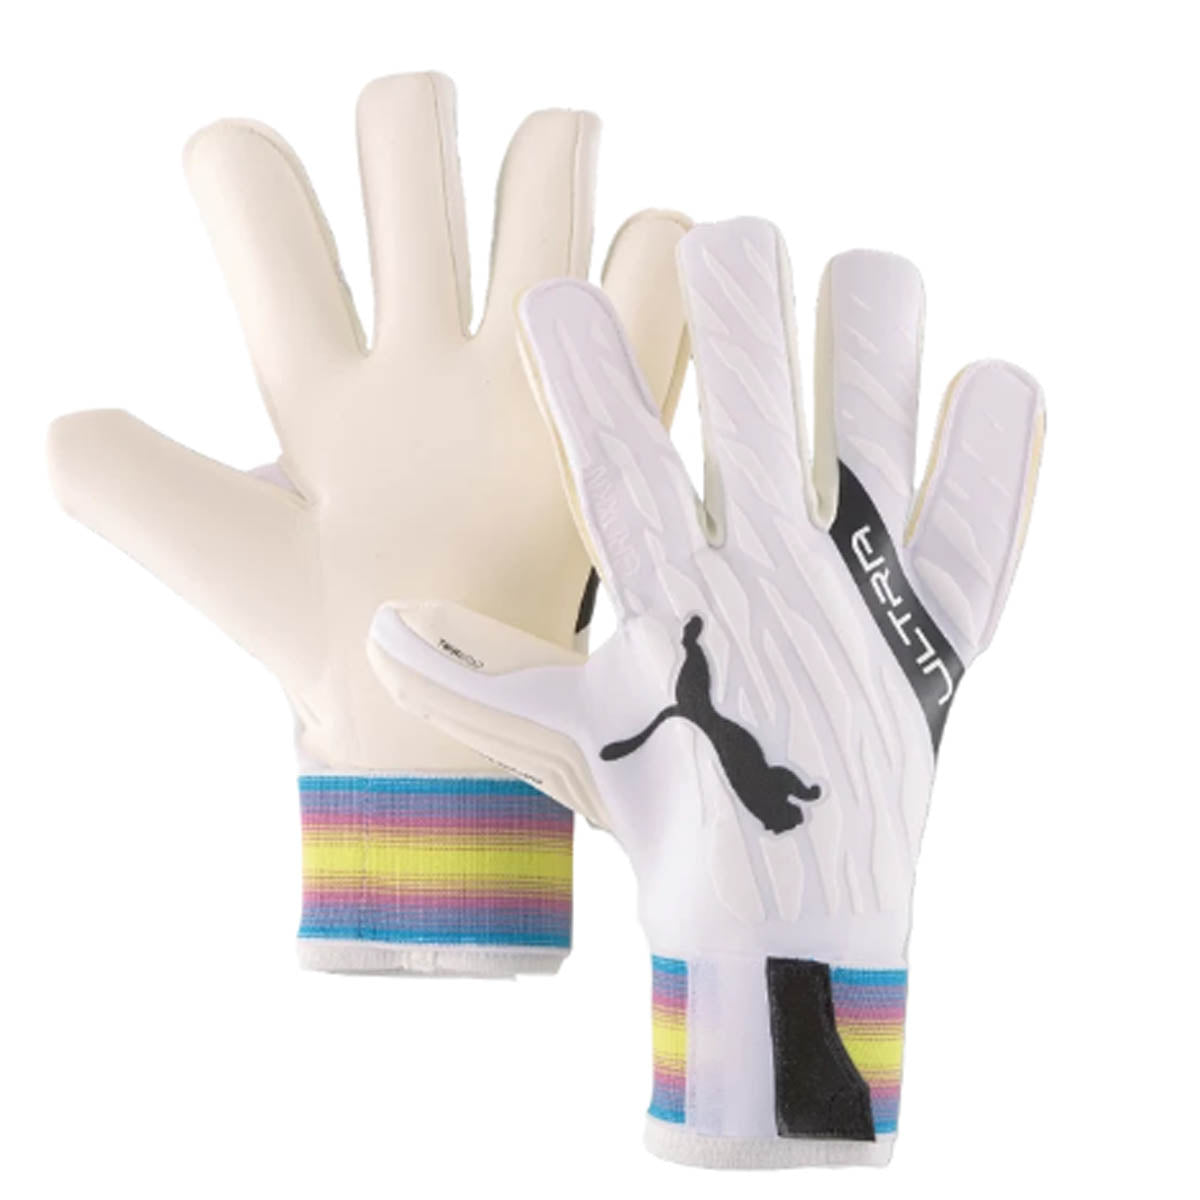 Puma Ultra Grip 1 Hybrid Pro White | 04178606 Soccer Gloves Puma 8 White 